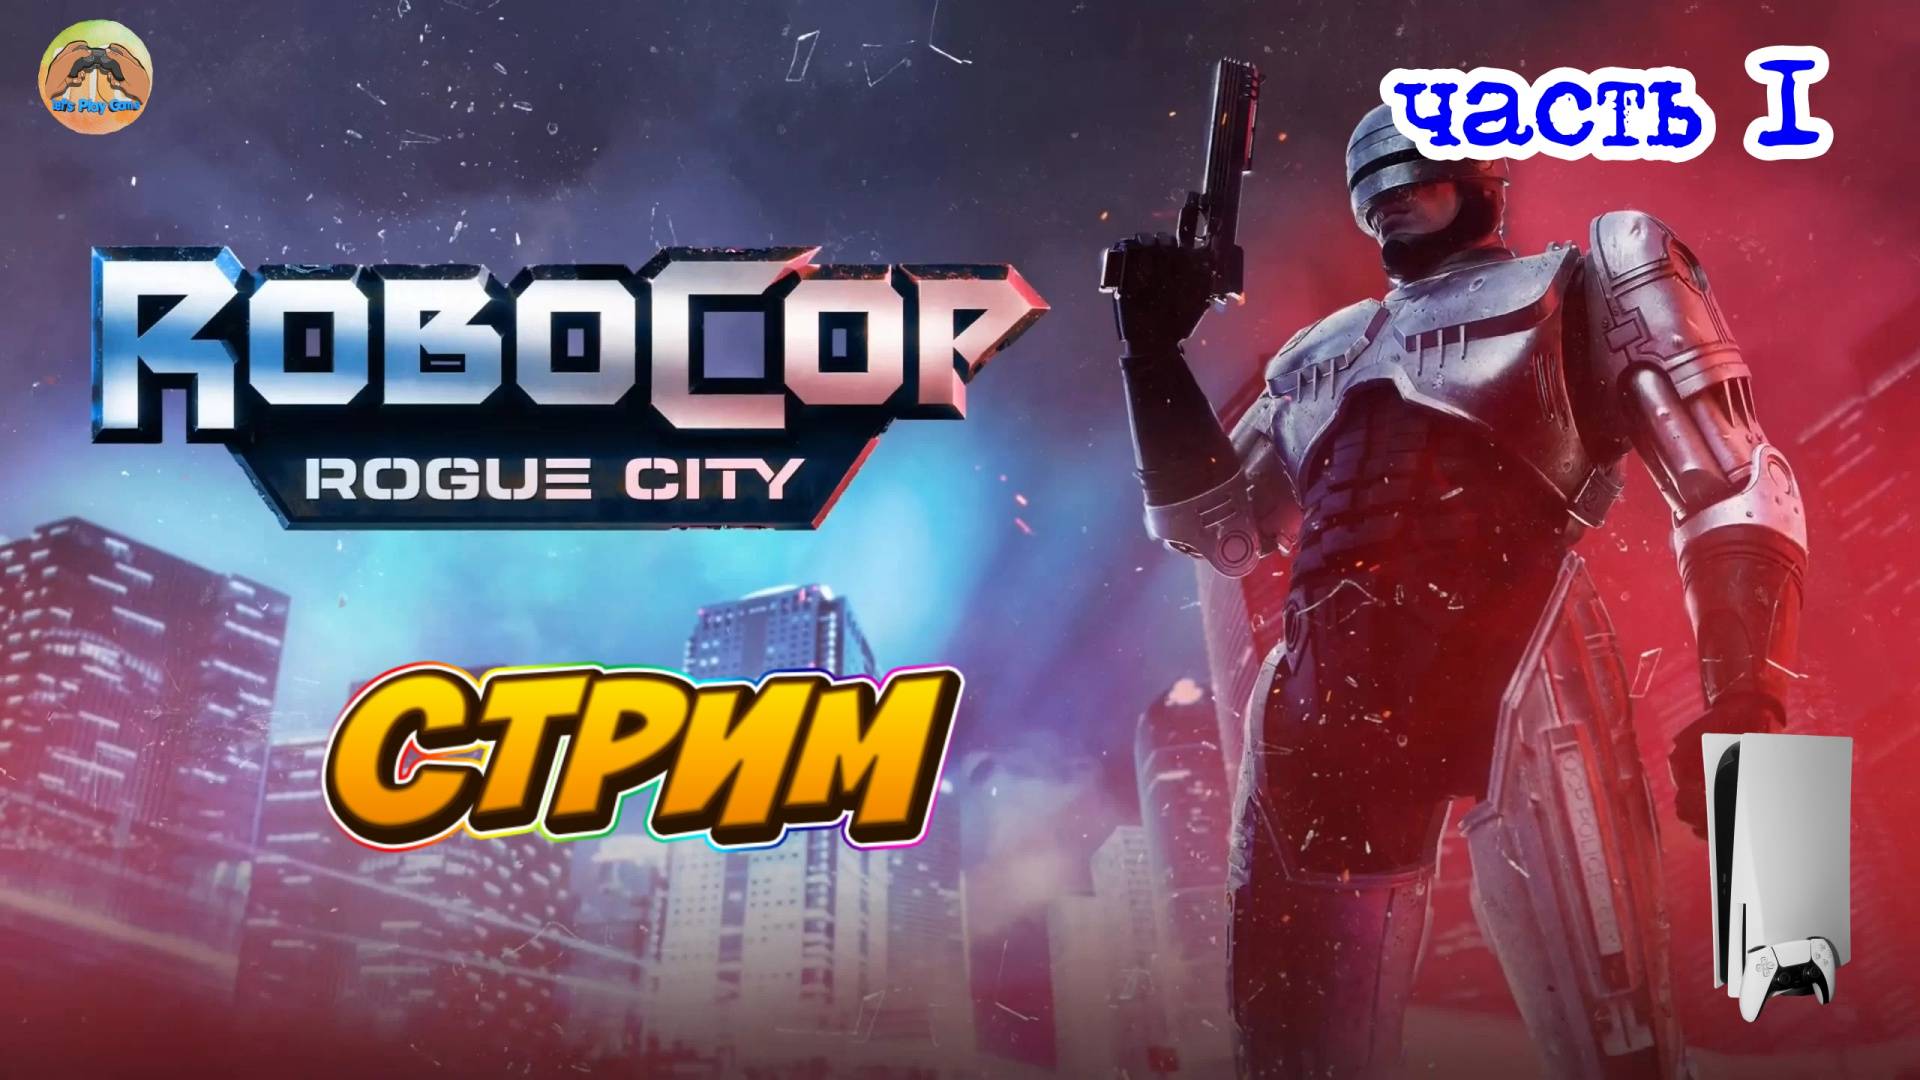 RoboCop: Rogue city